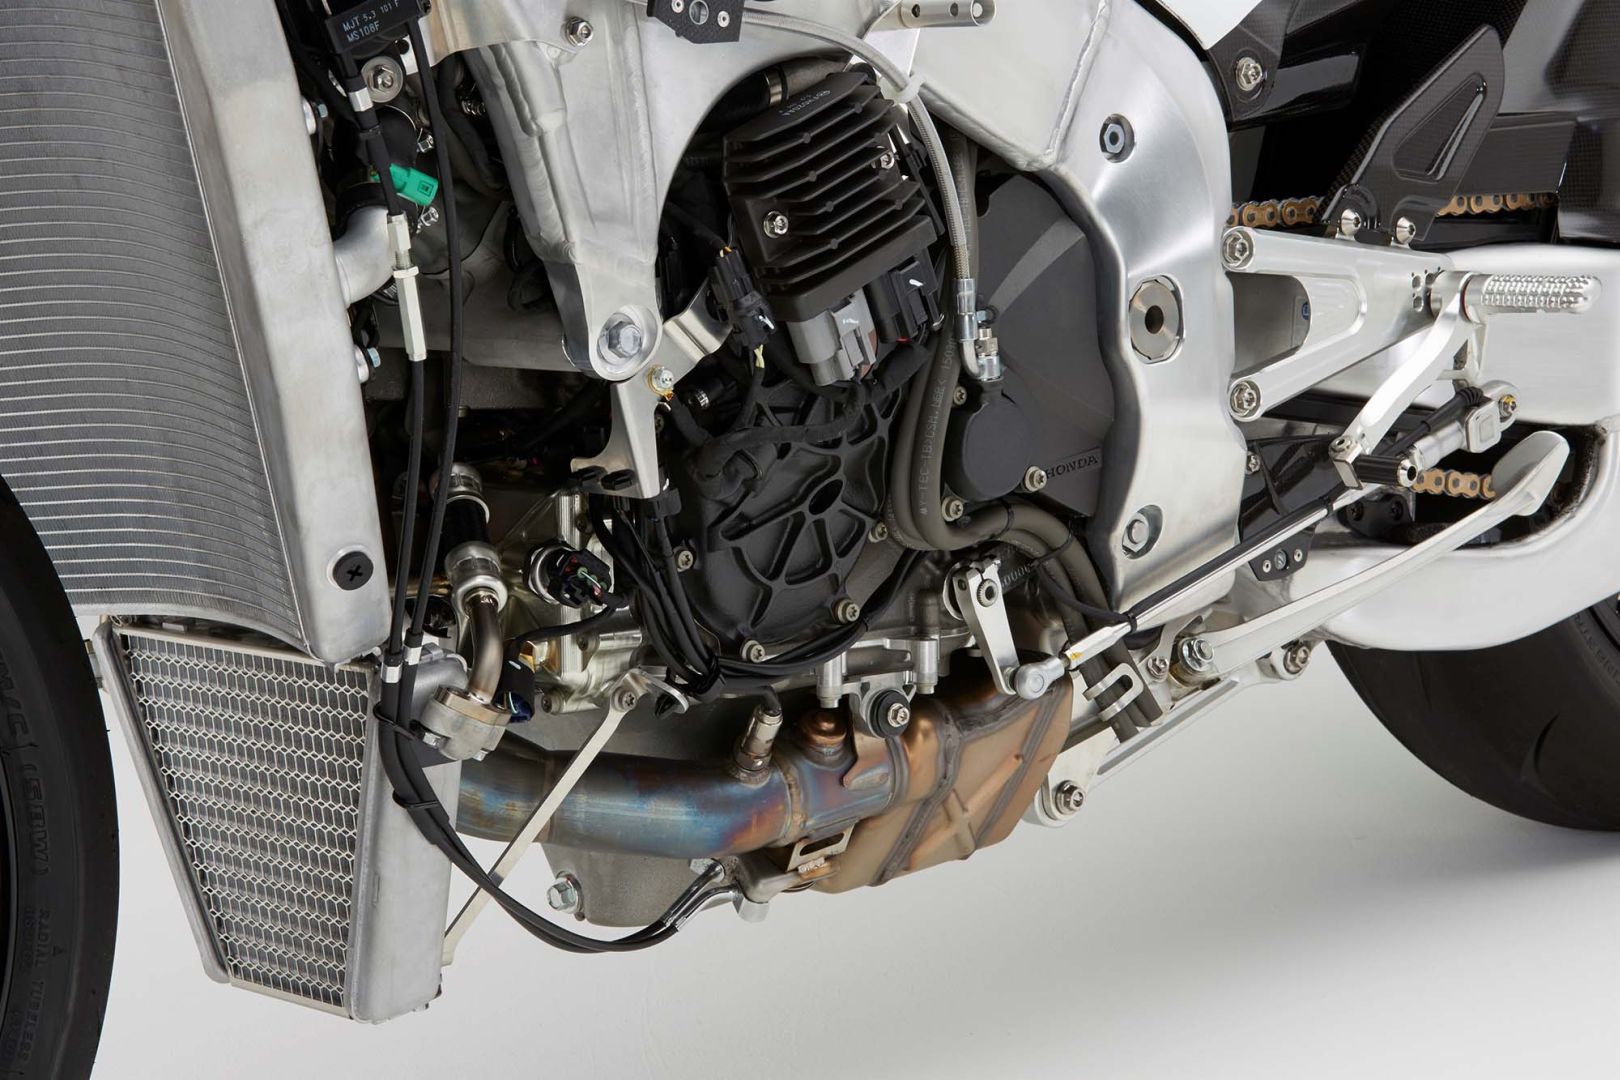 Honda RC213V S Hondas Real Race Replica Sort Of NEORIDERS